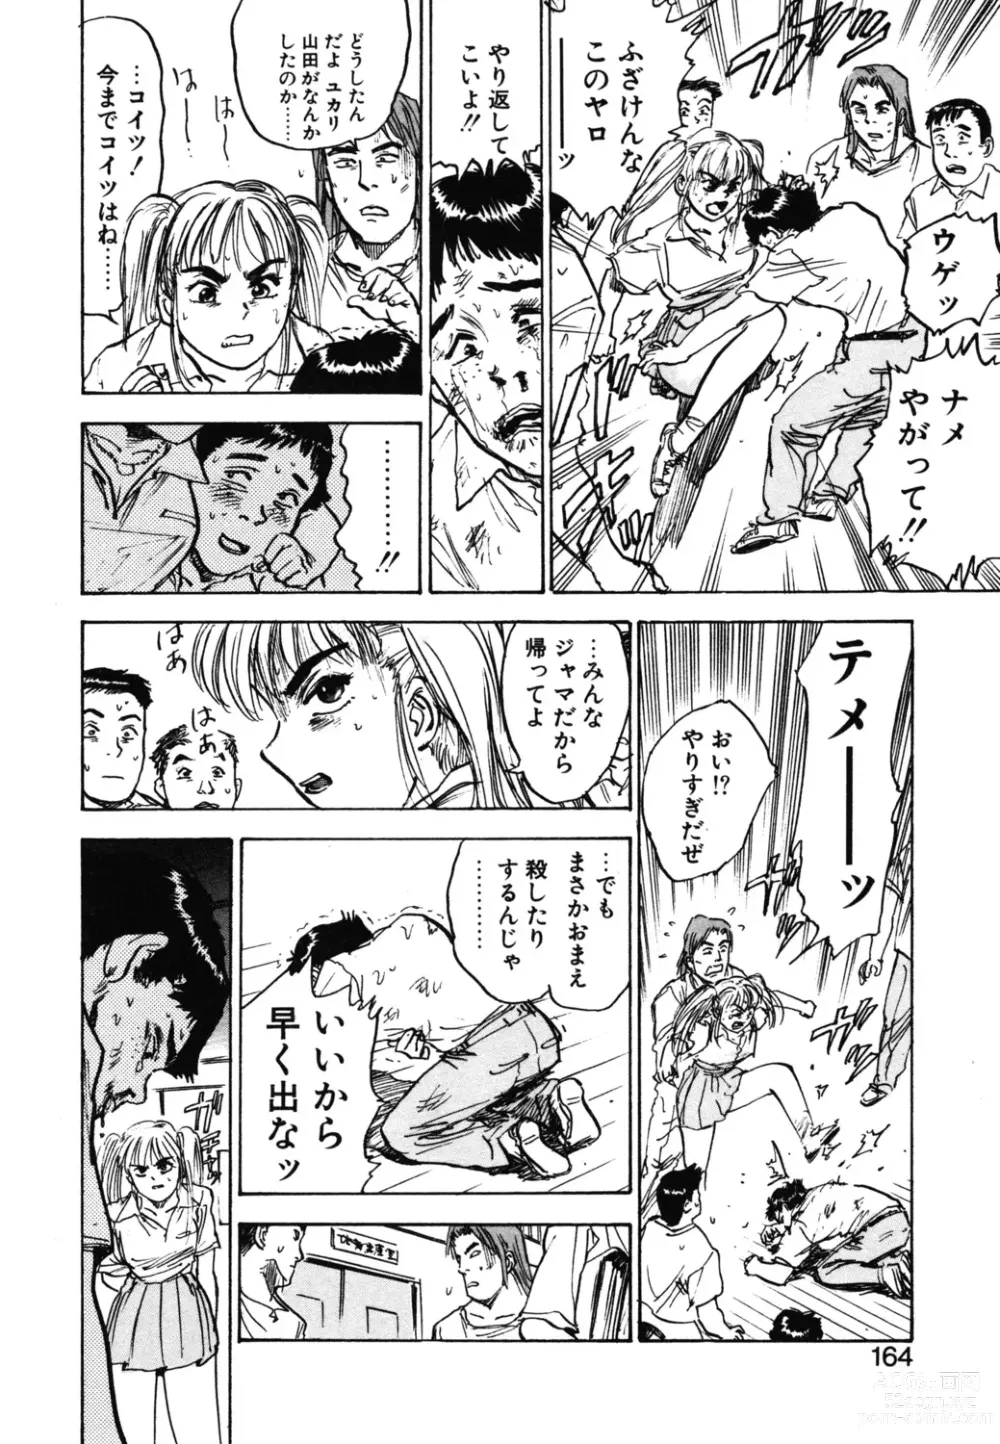 Page 162 of manga Abunai Reiko Sensei 1